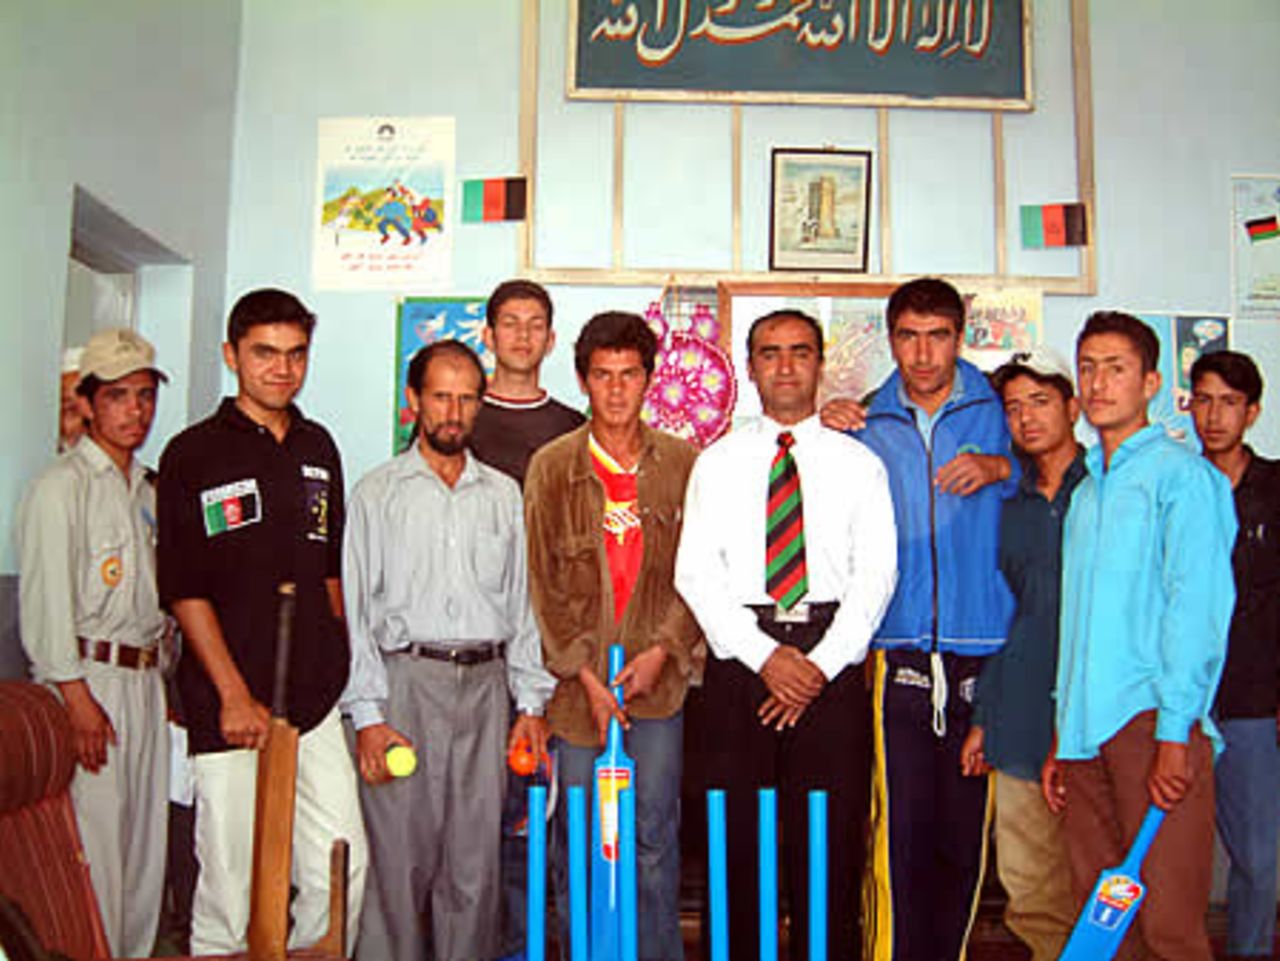 Khushal Khan High School sports teachers and students with Taj Malik Afghan National coach (white shirt and tie), Abdul Khalil (black shirt) ACF GM and Khalik Dad Noori (blue shirt) receiving Kwik cricket set donated by ECB.